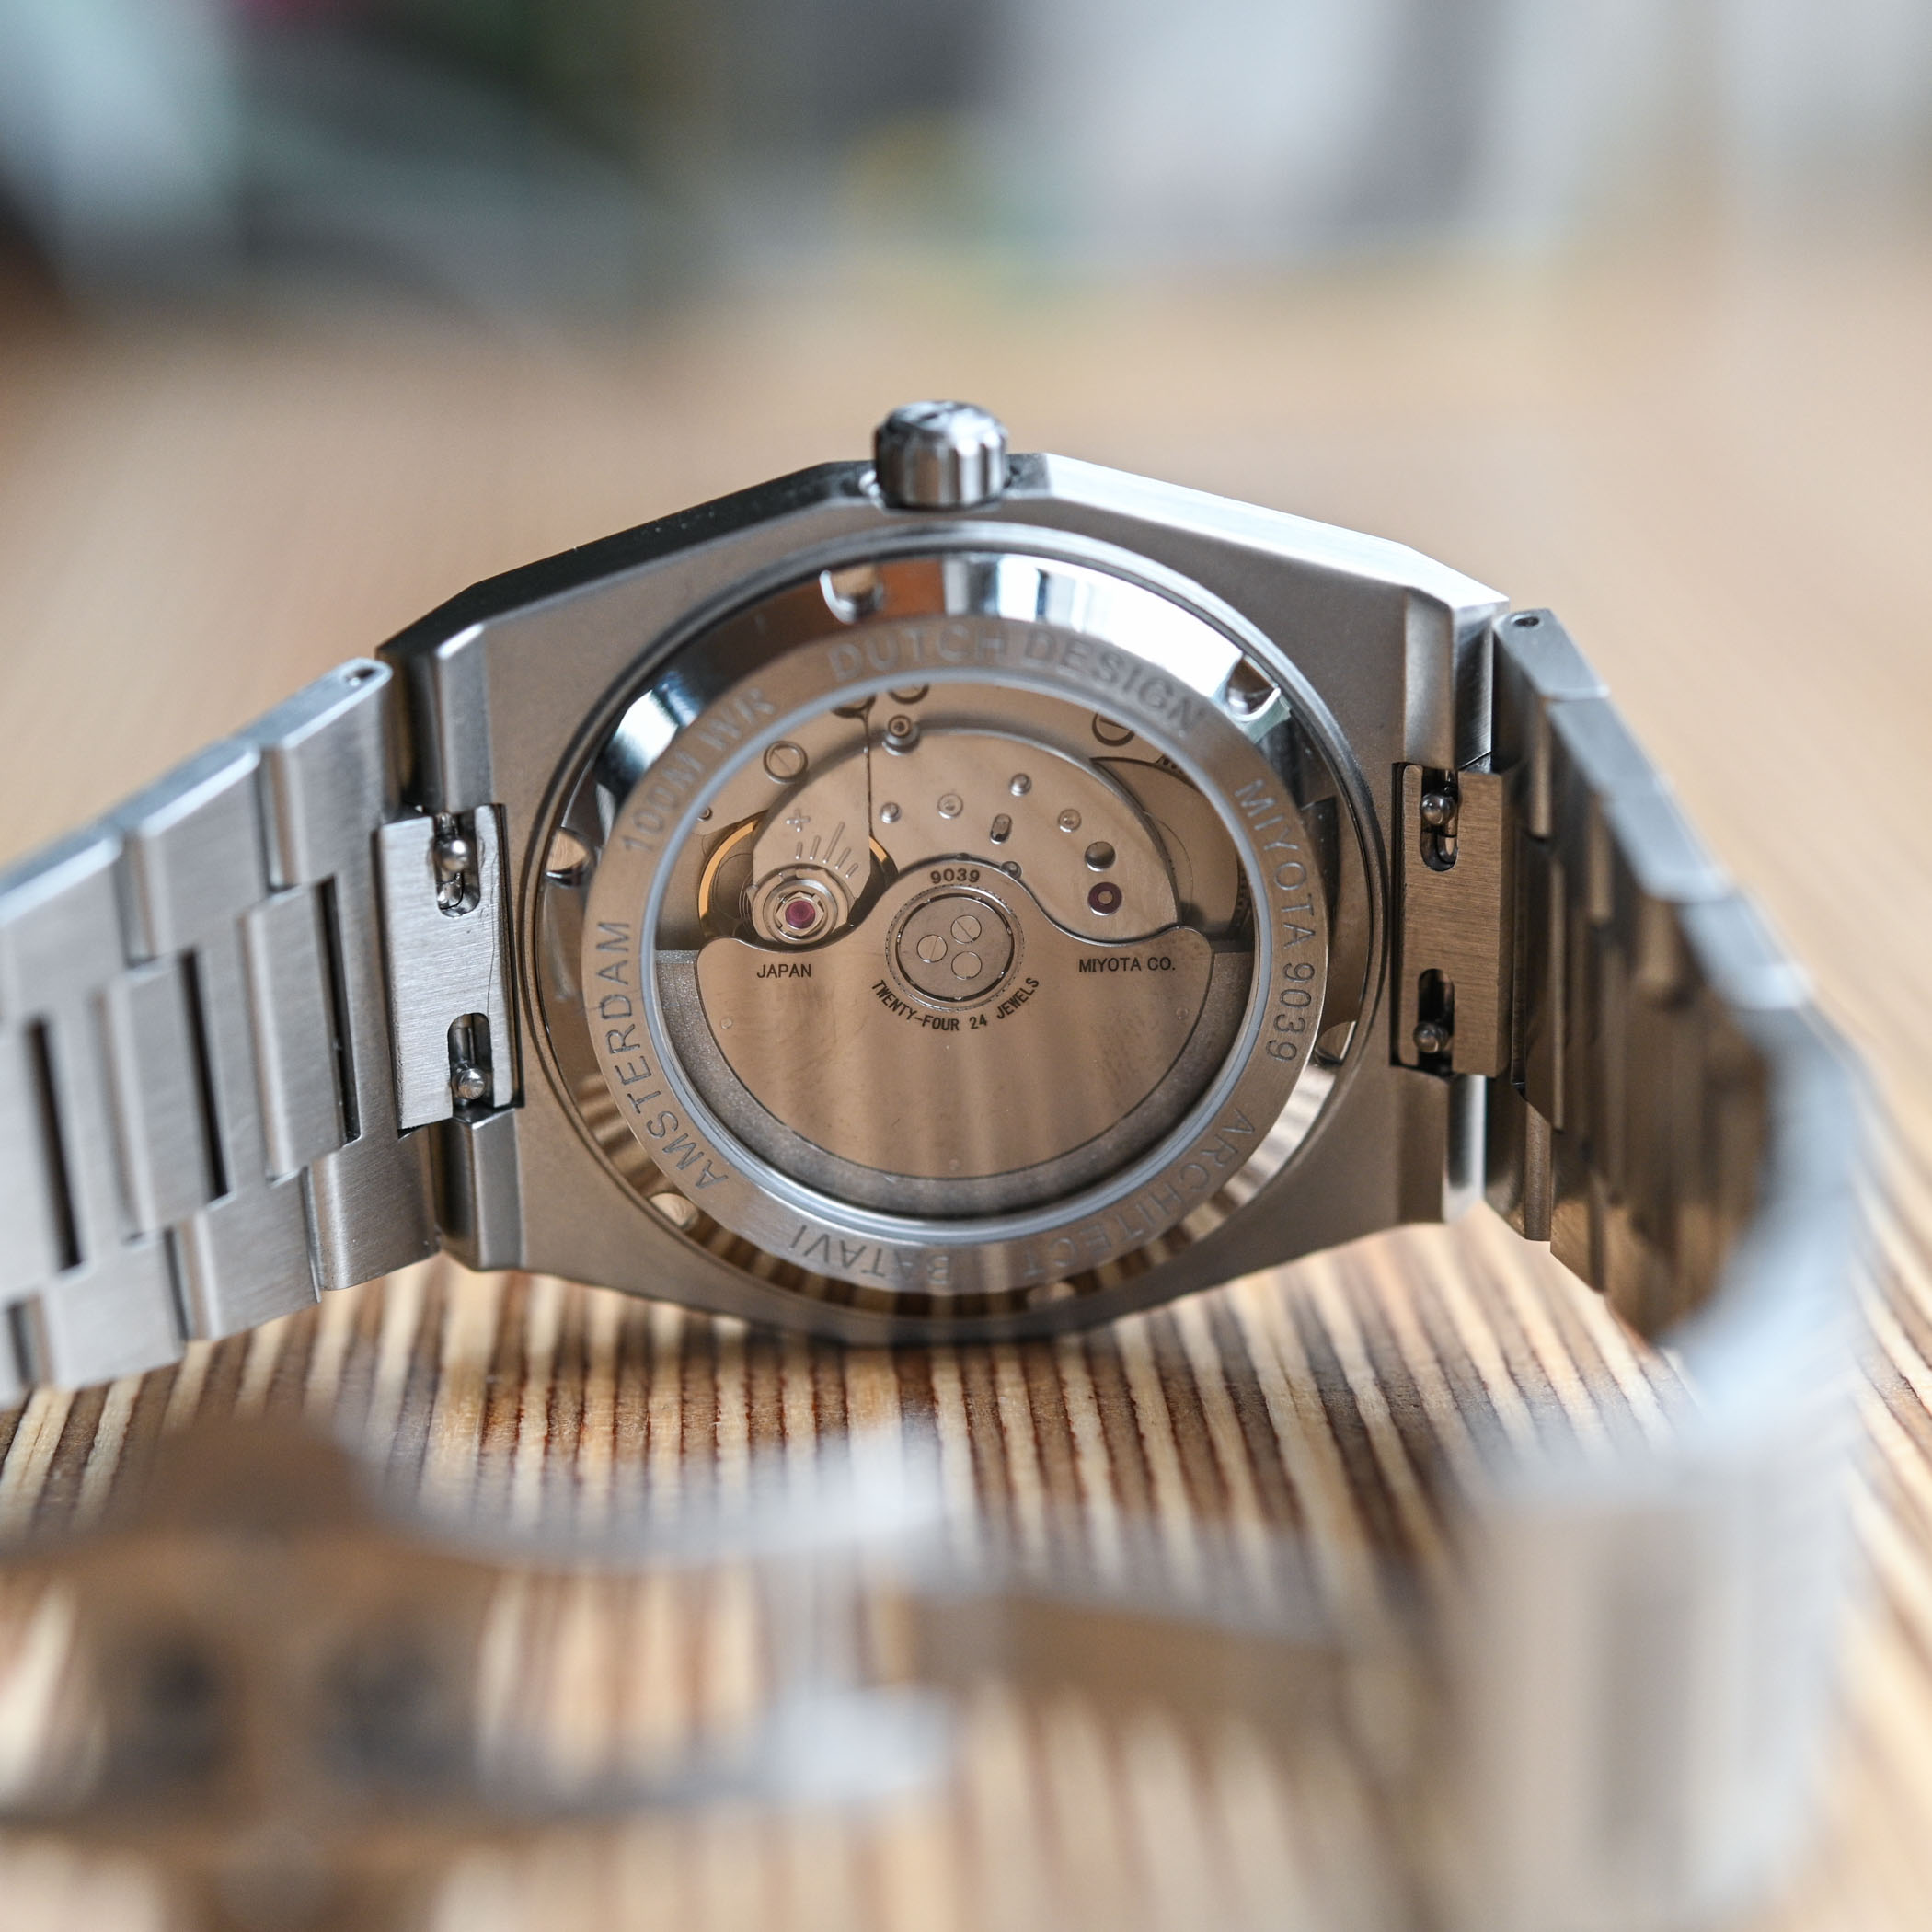 Batavi Architect Sports Watch Integrated Bracelet - Launching on Kickstarter